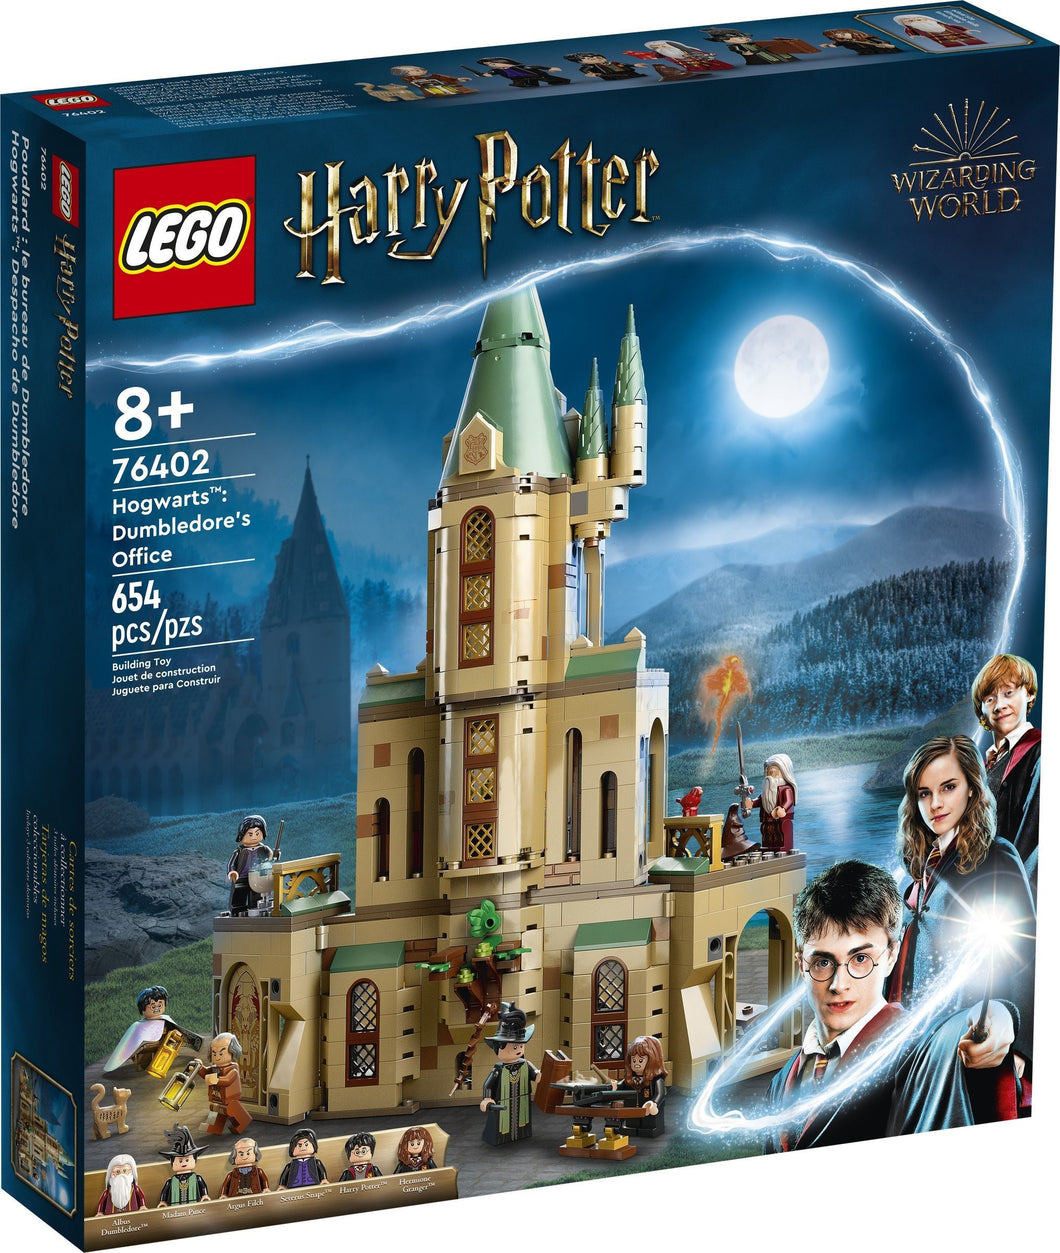 LEGO® Harry Potter™ 76402 Hogwarts™: Dumbledore's Office (654 Pieces)